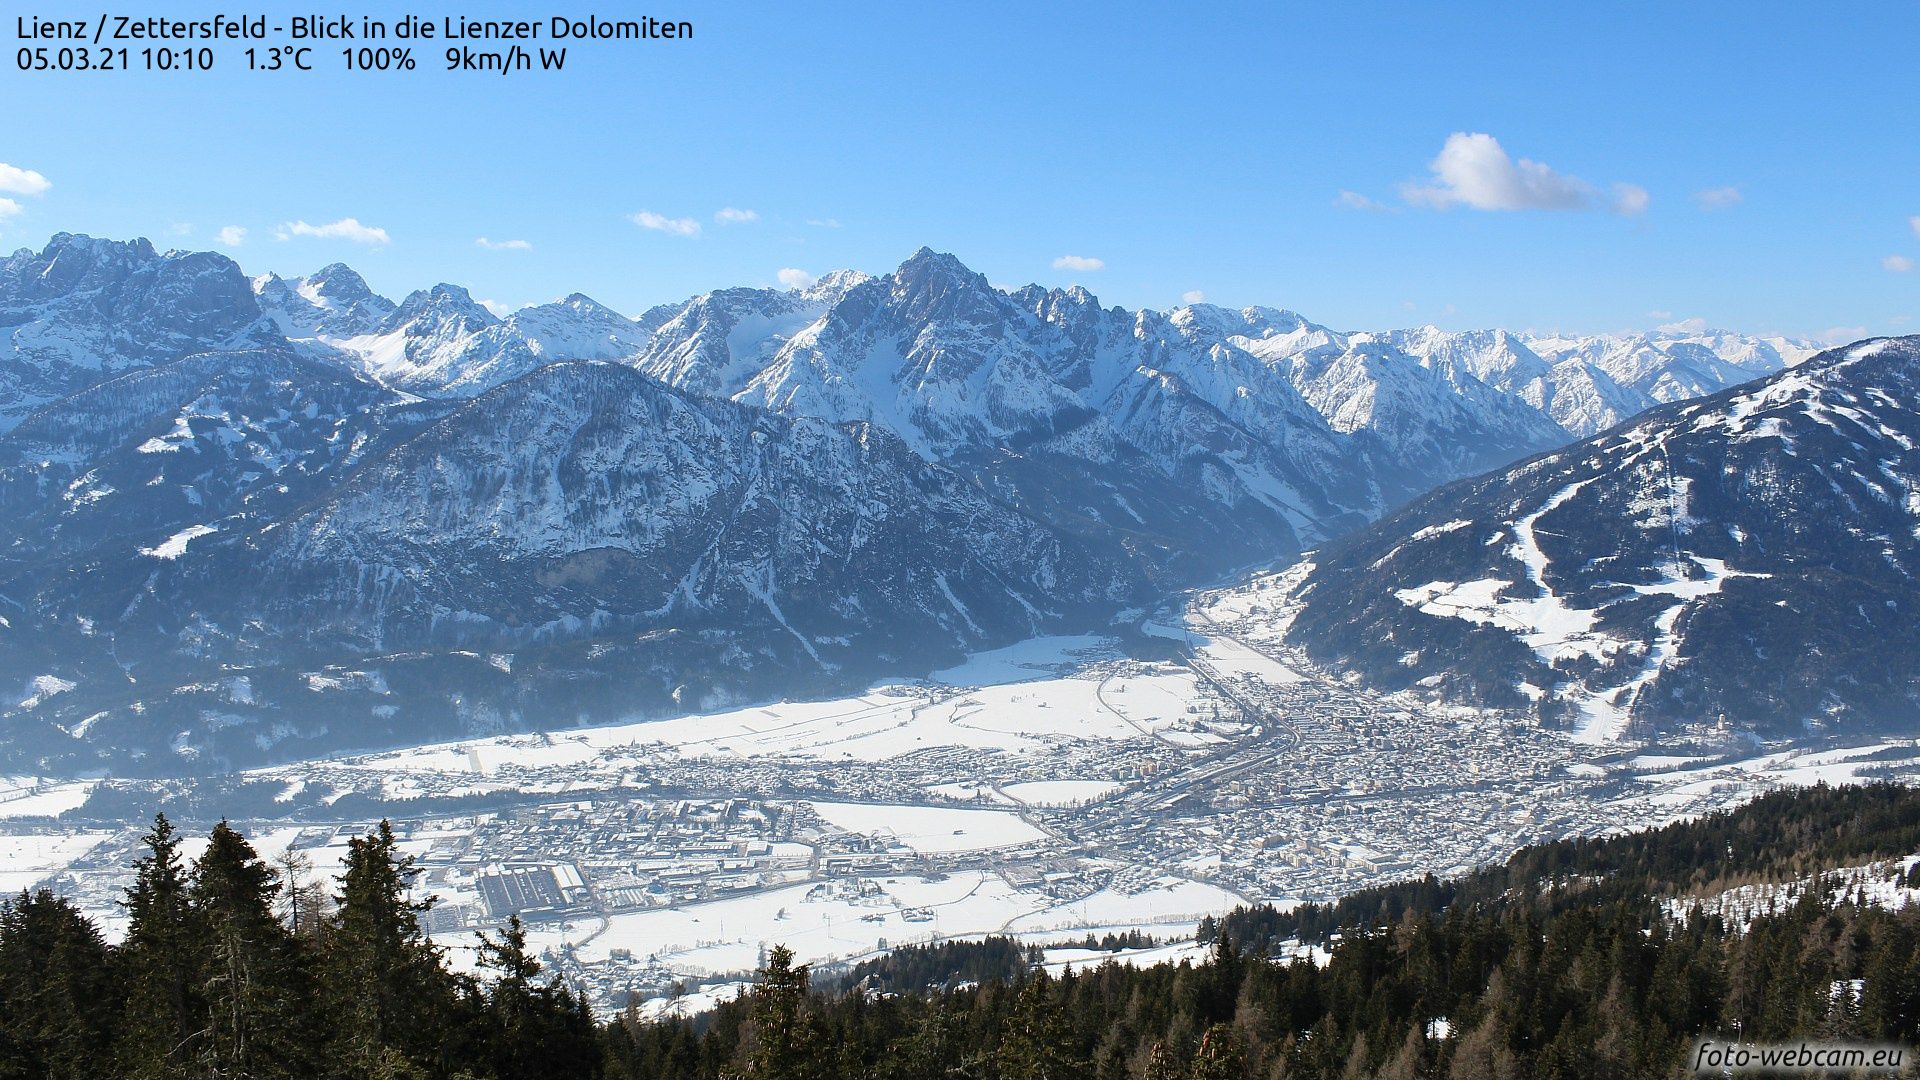 Sunny föhn conditions in the Southern Alps (foto-webcam.eu)